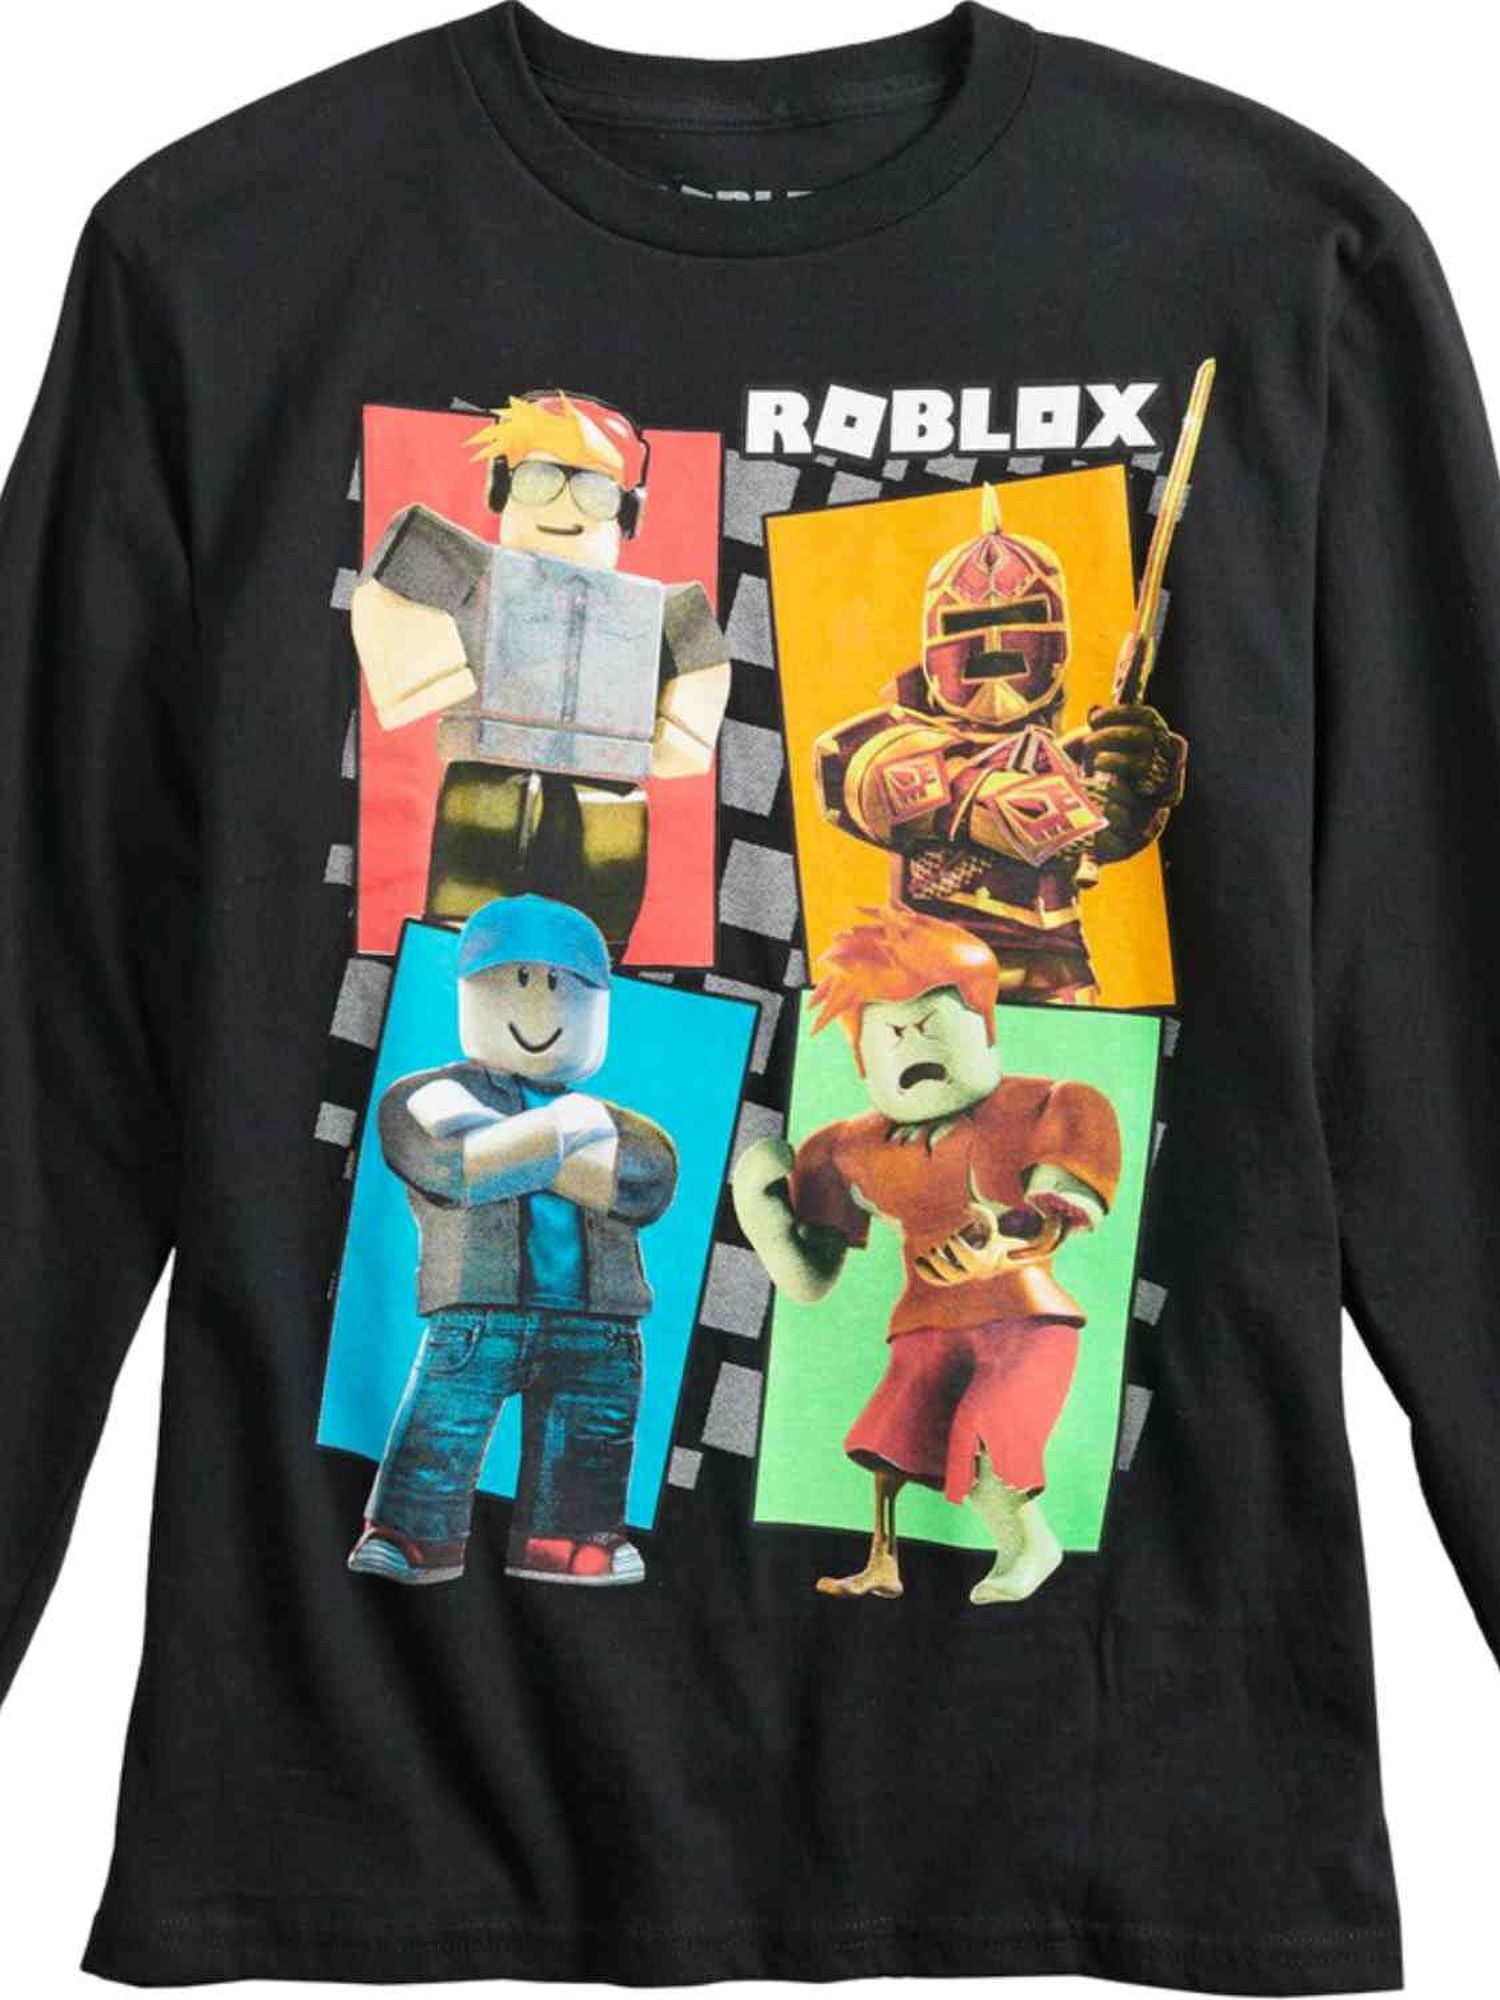 Boys Black Roblox Multi Character T Shirt Graphic Tee Shirt Large 6 7 Walmart Com Walmart Com - roblox t shirt walmart